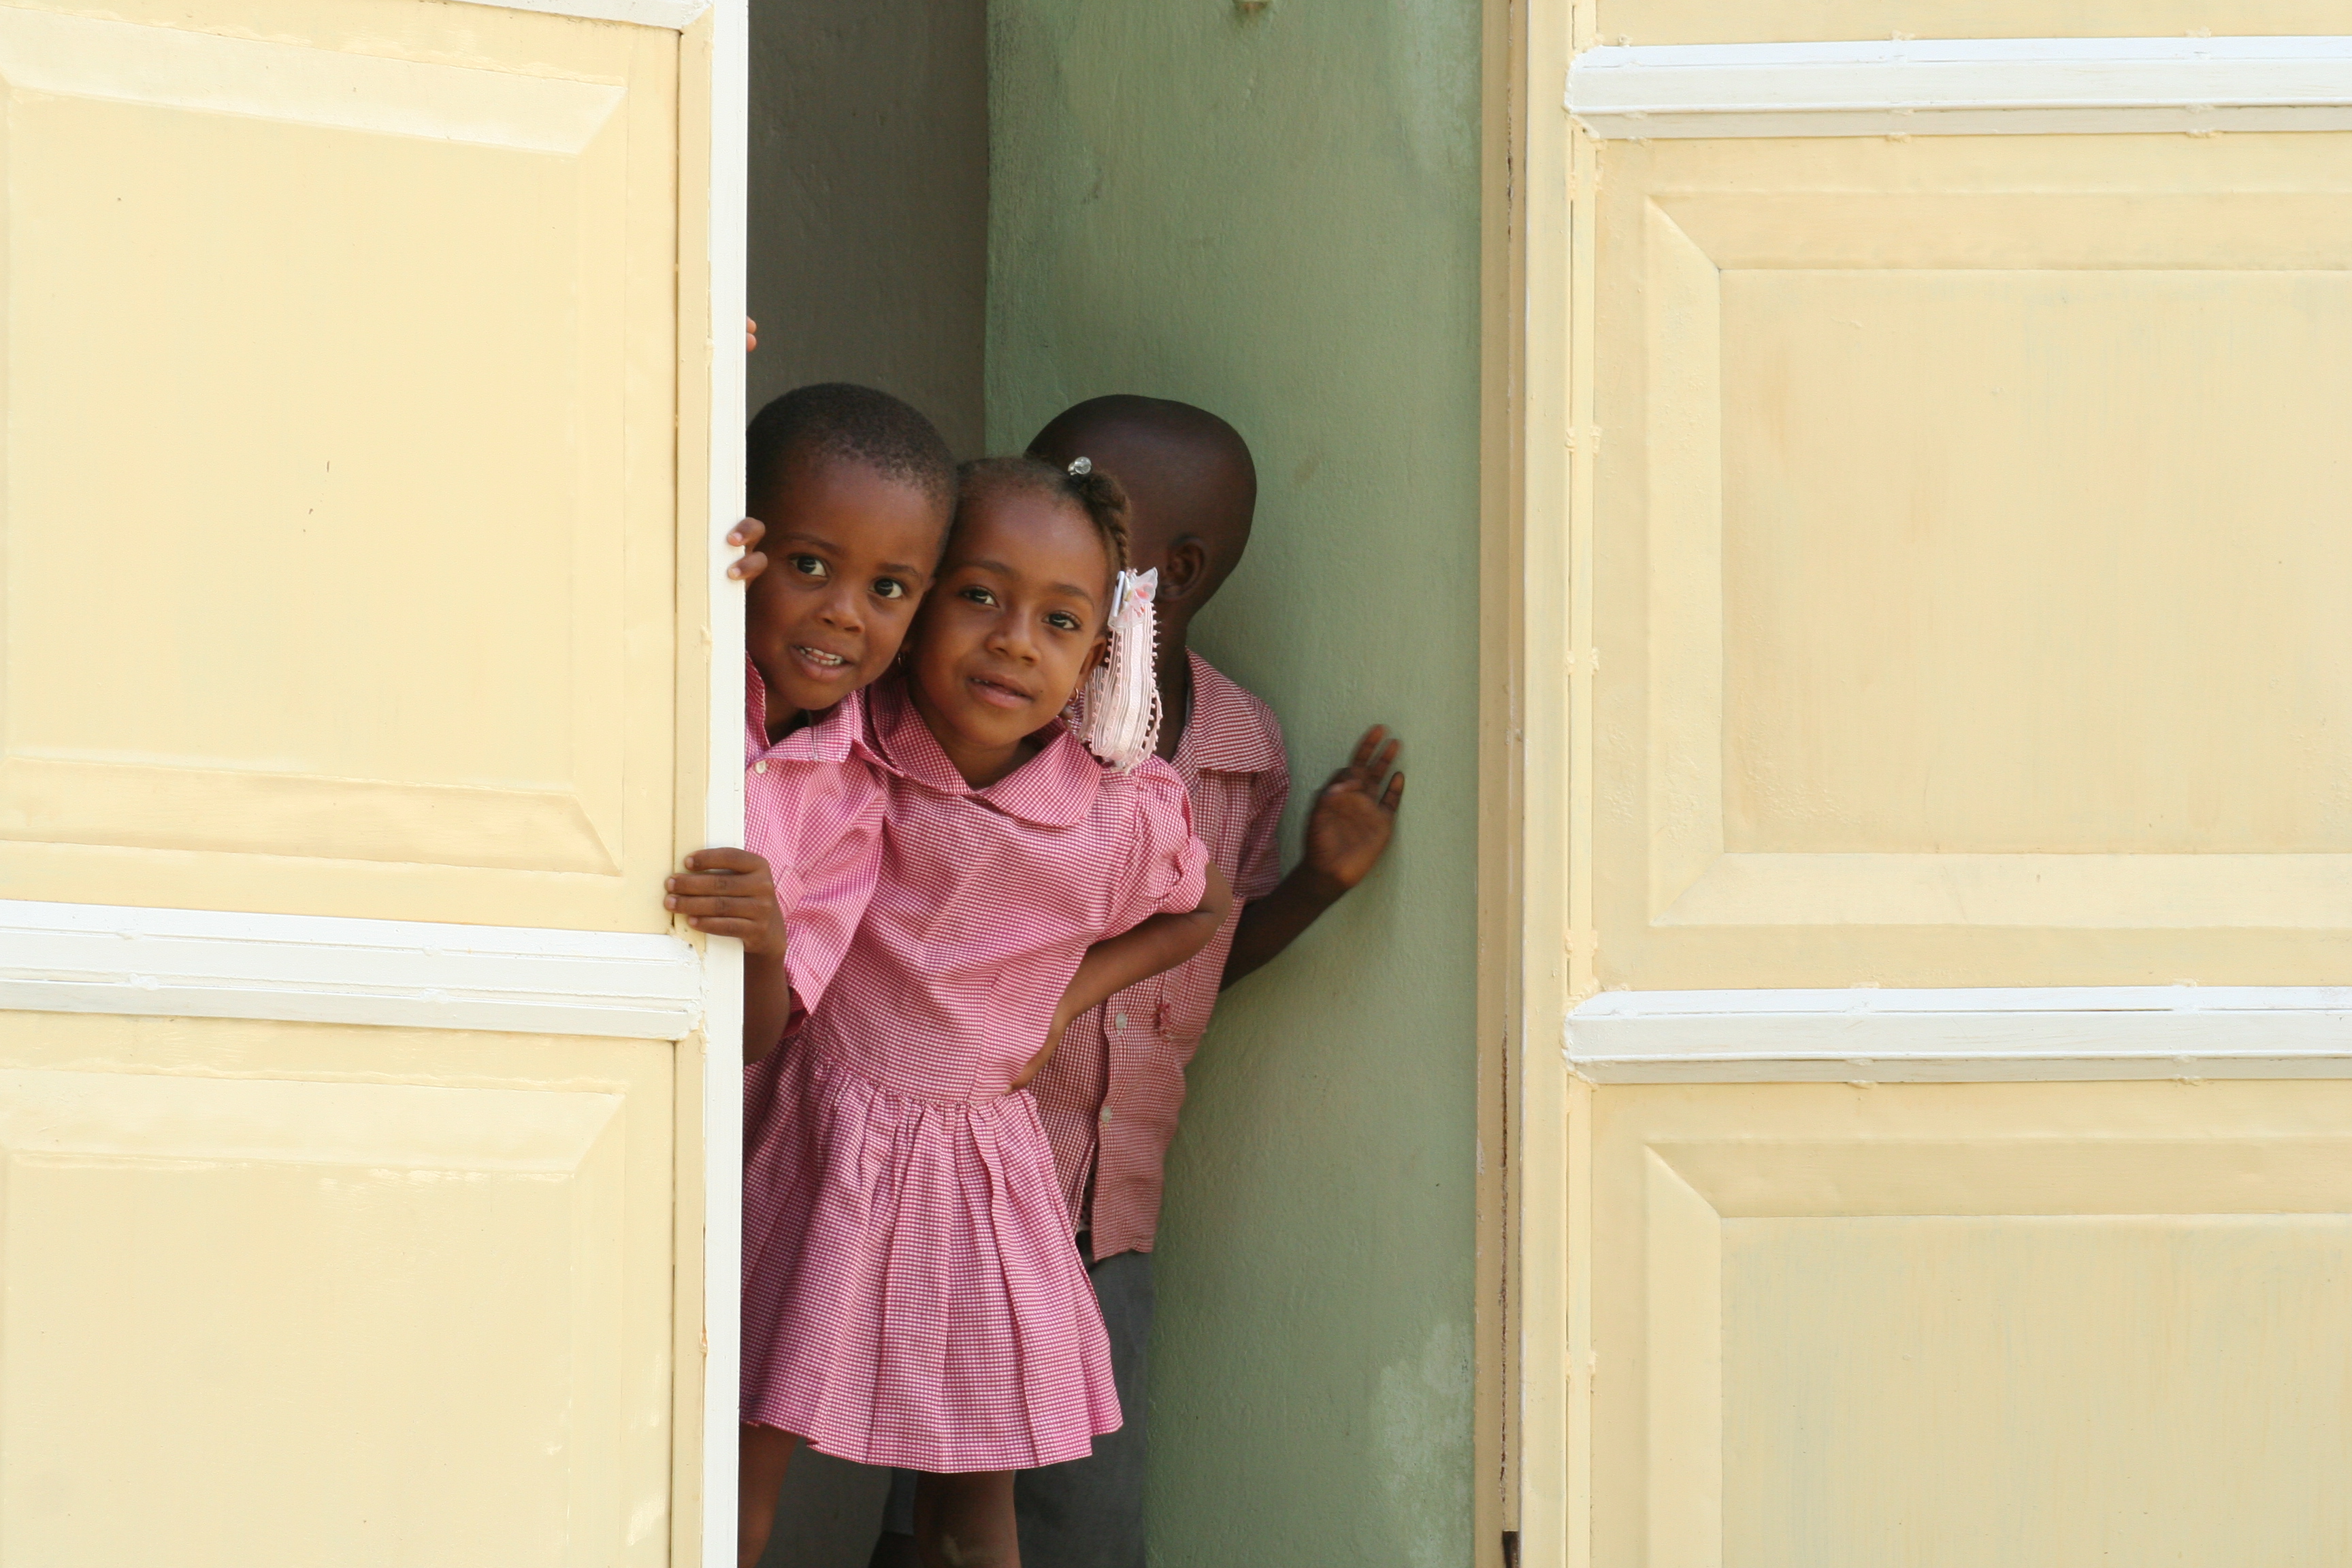 Kids in Haiti